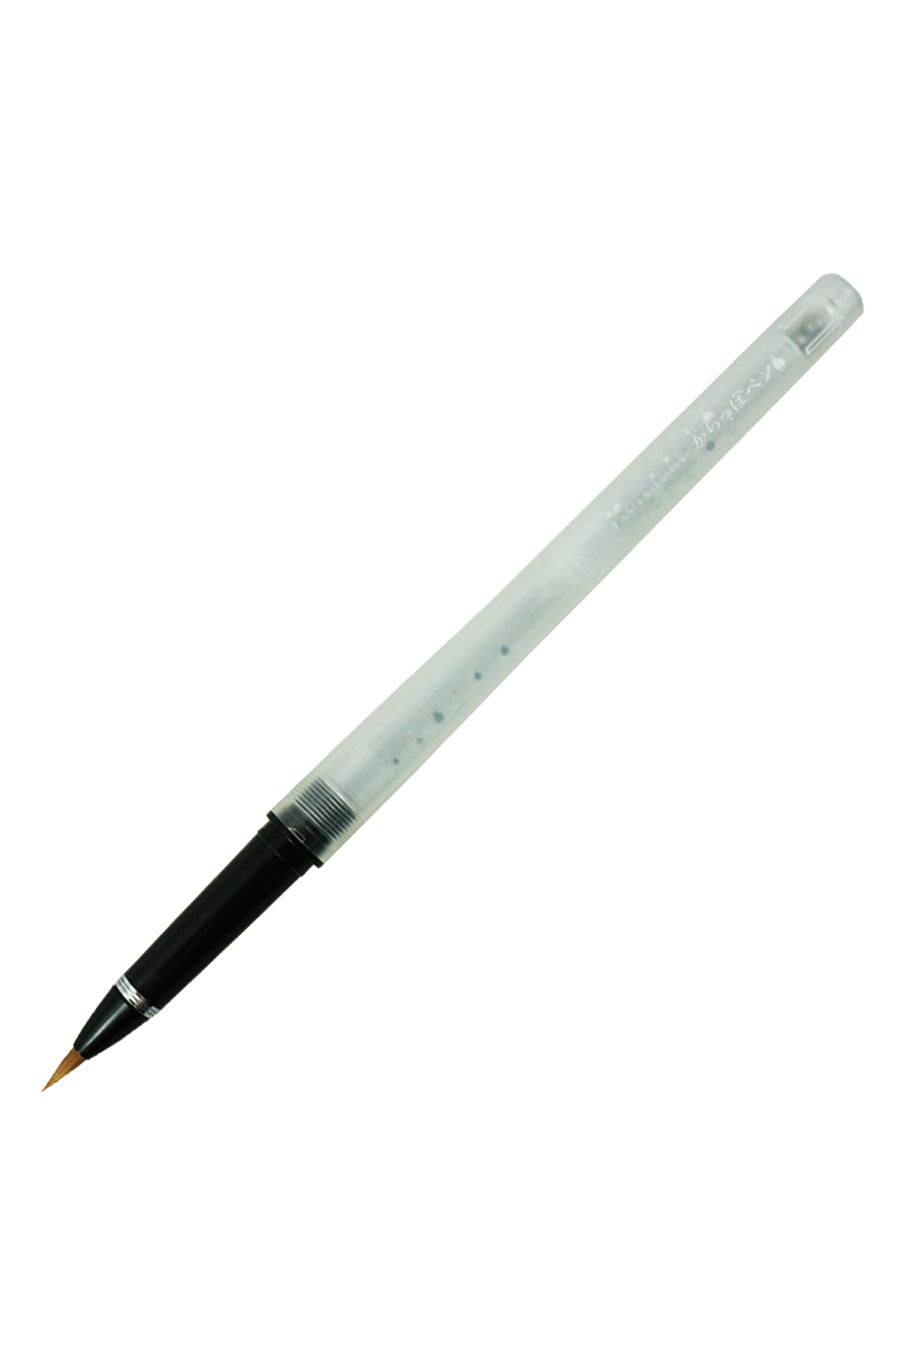 Kuretake® Karappo Pens (Empty Pen) and Cartridges